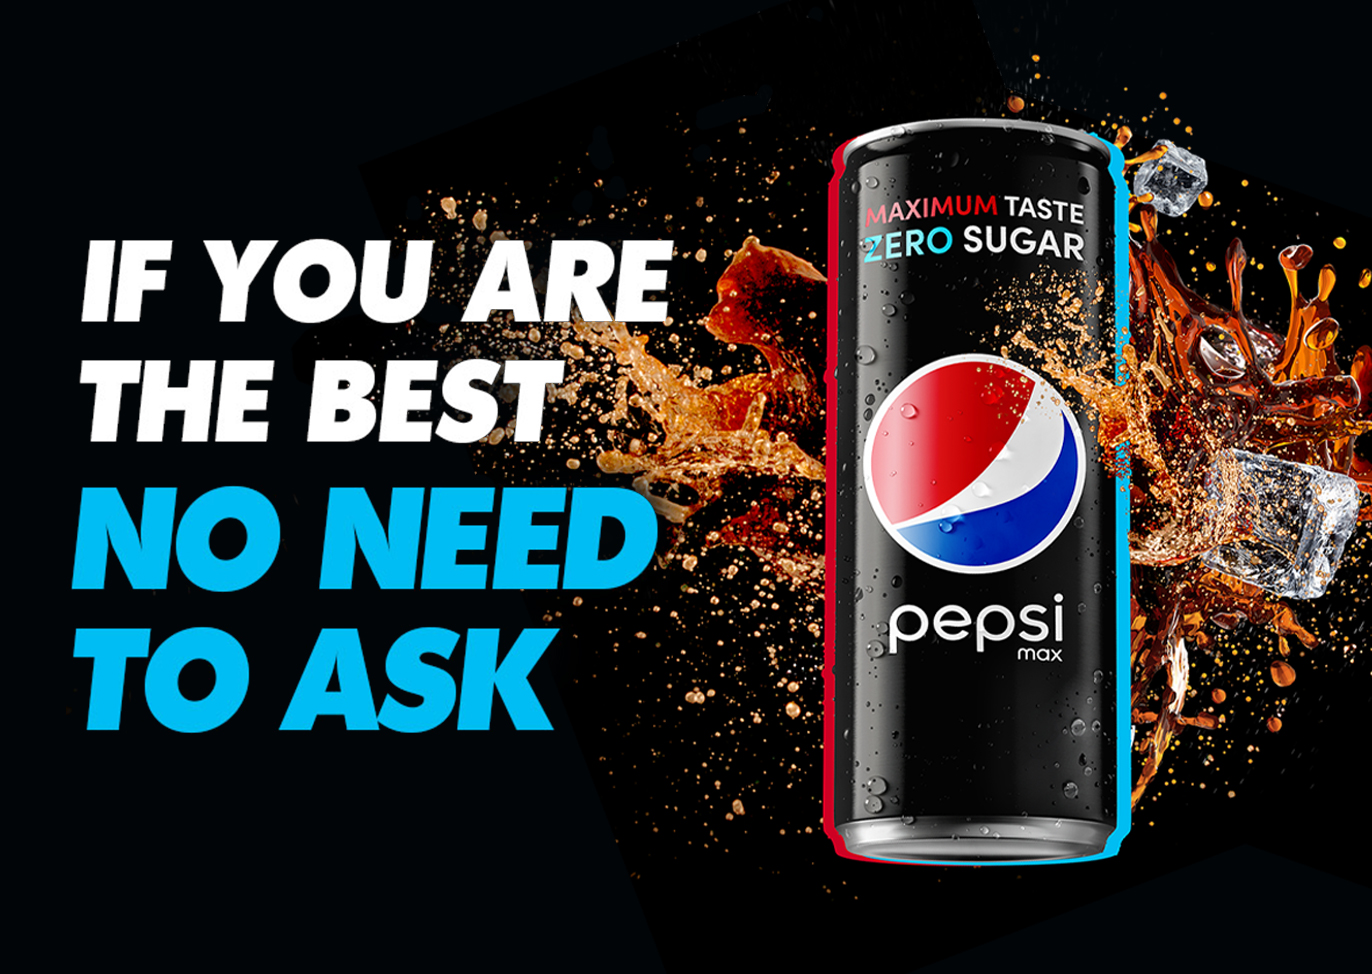 Grafika z puszką Pepsi Max i napisem "If you are the best no need to ask"